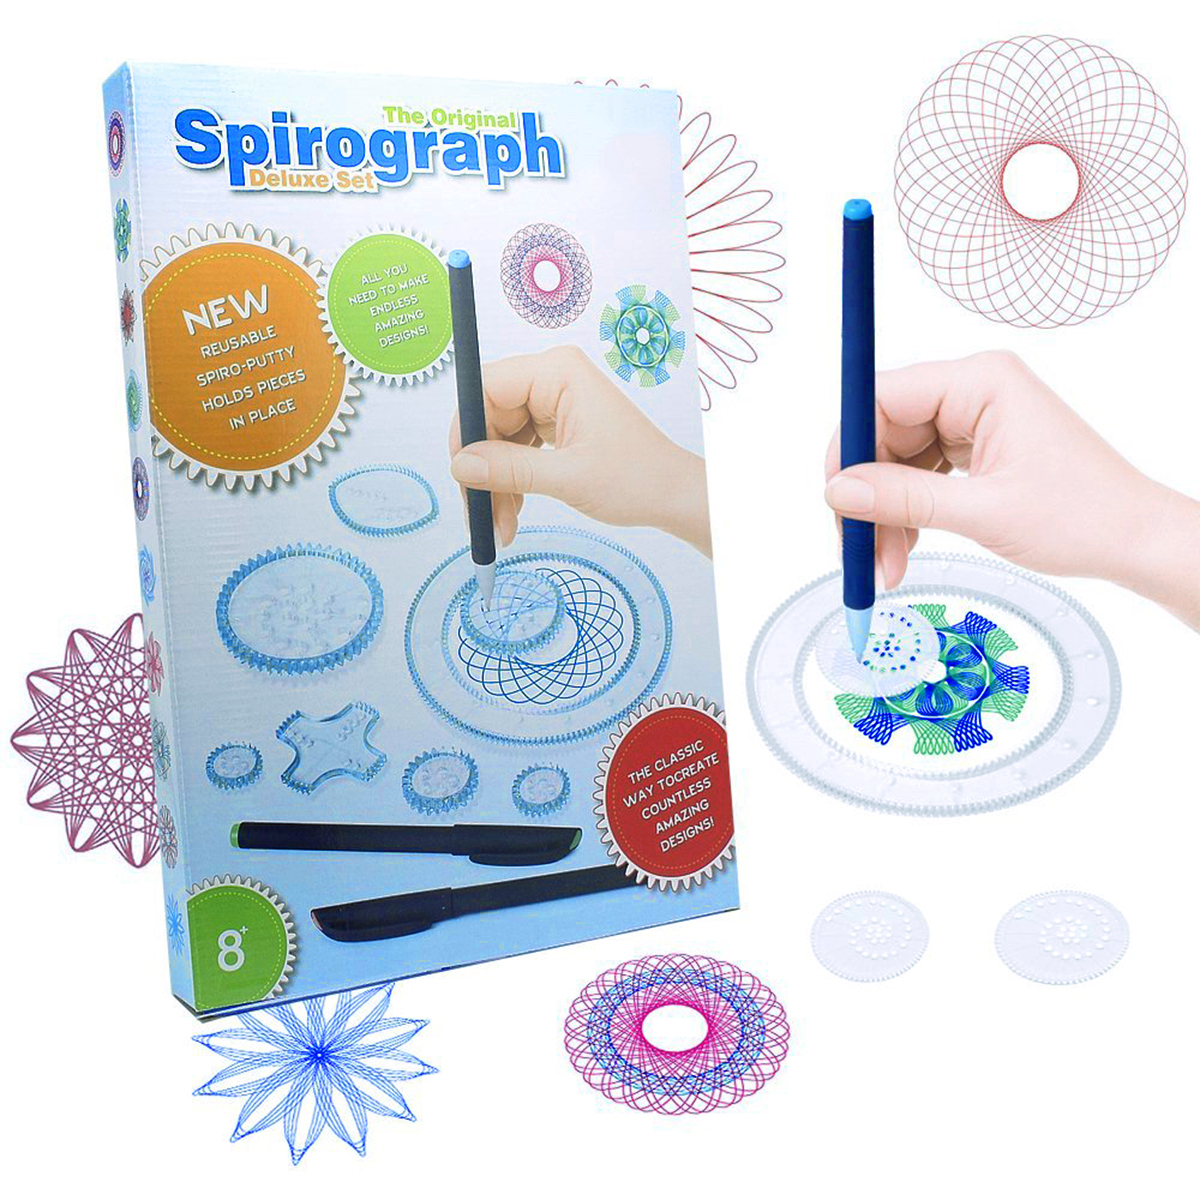 Original Spirograph Design Set Geometric Drawing Ruler Kids Spiral Art Craft Creation Education Toy 28